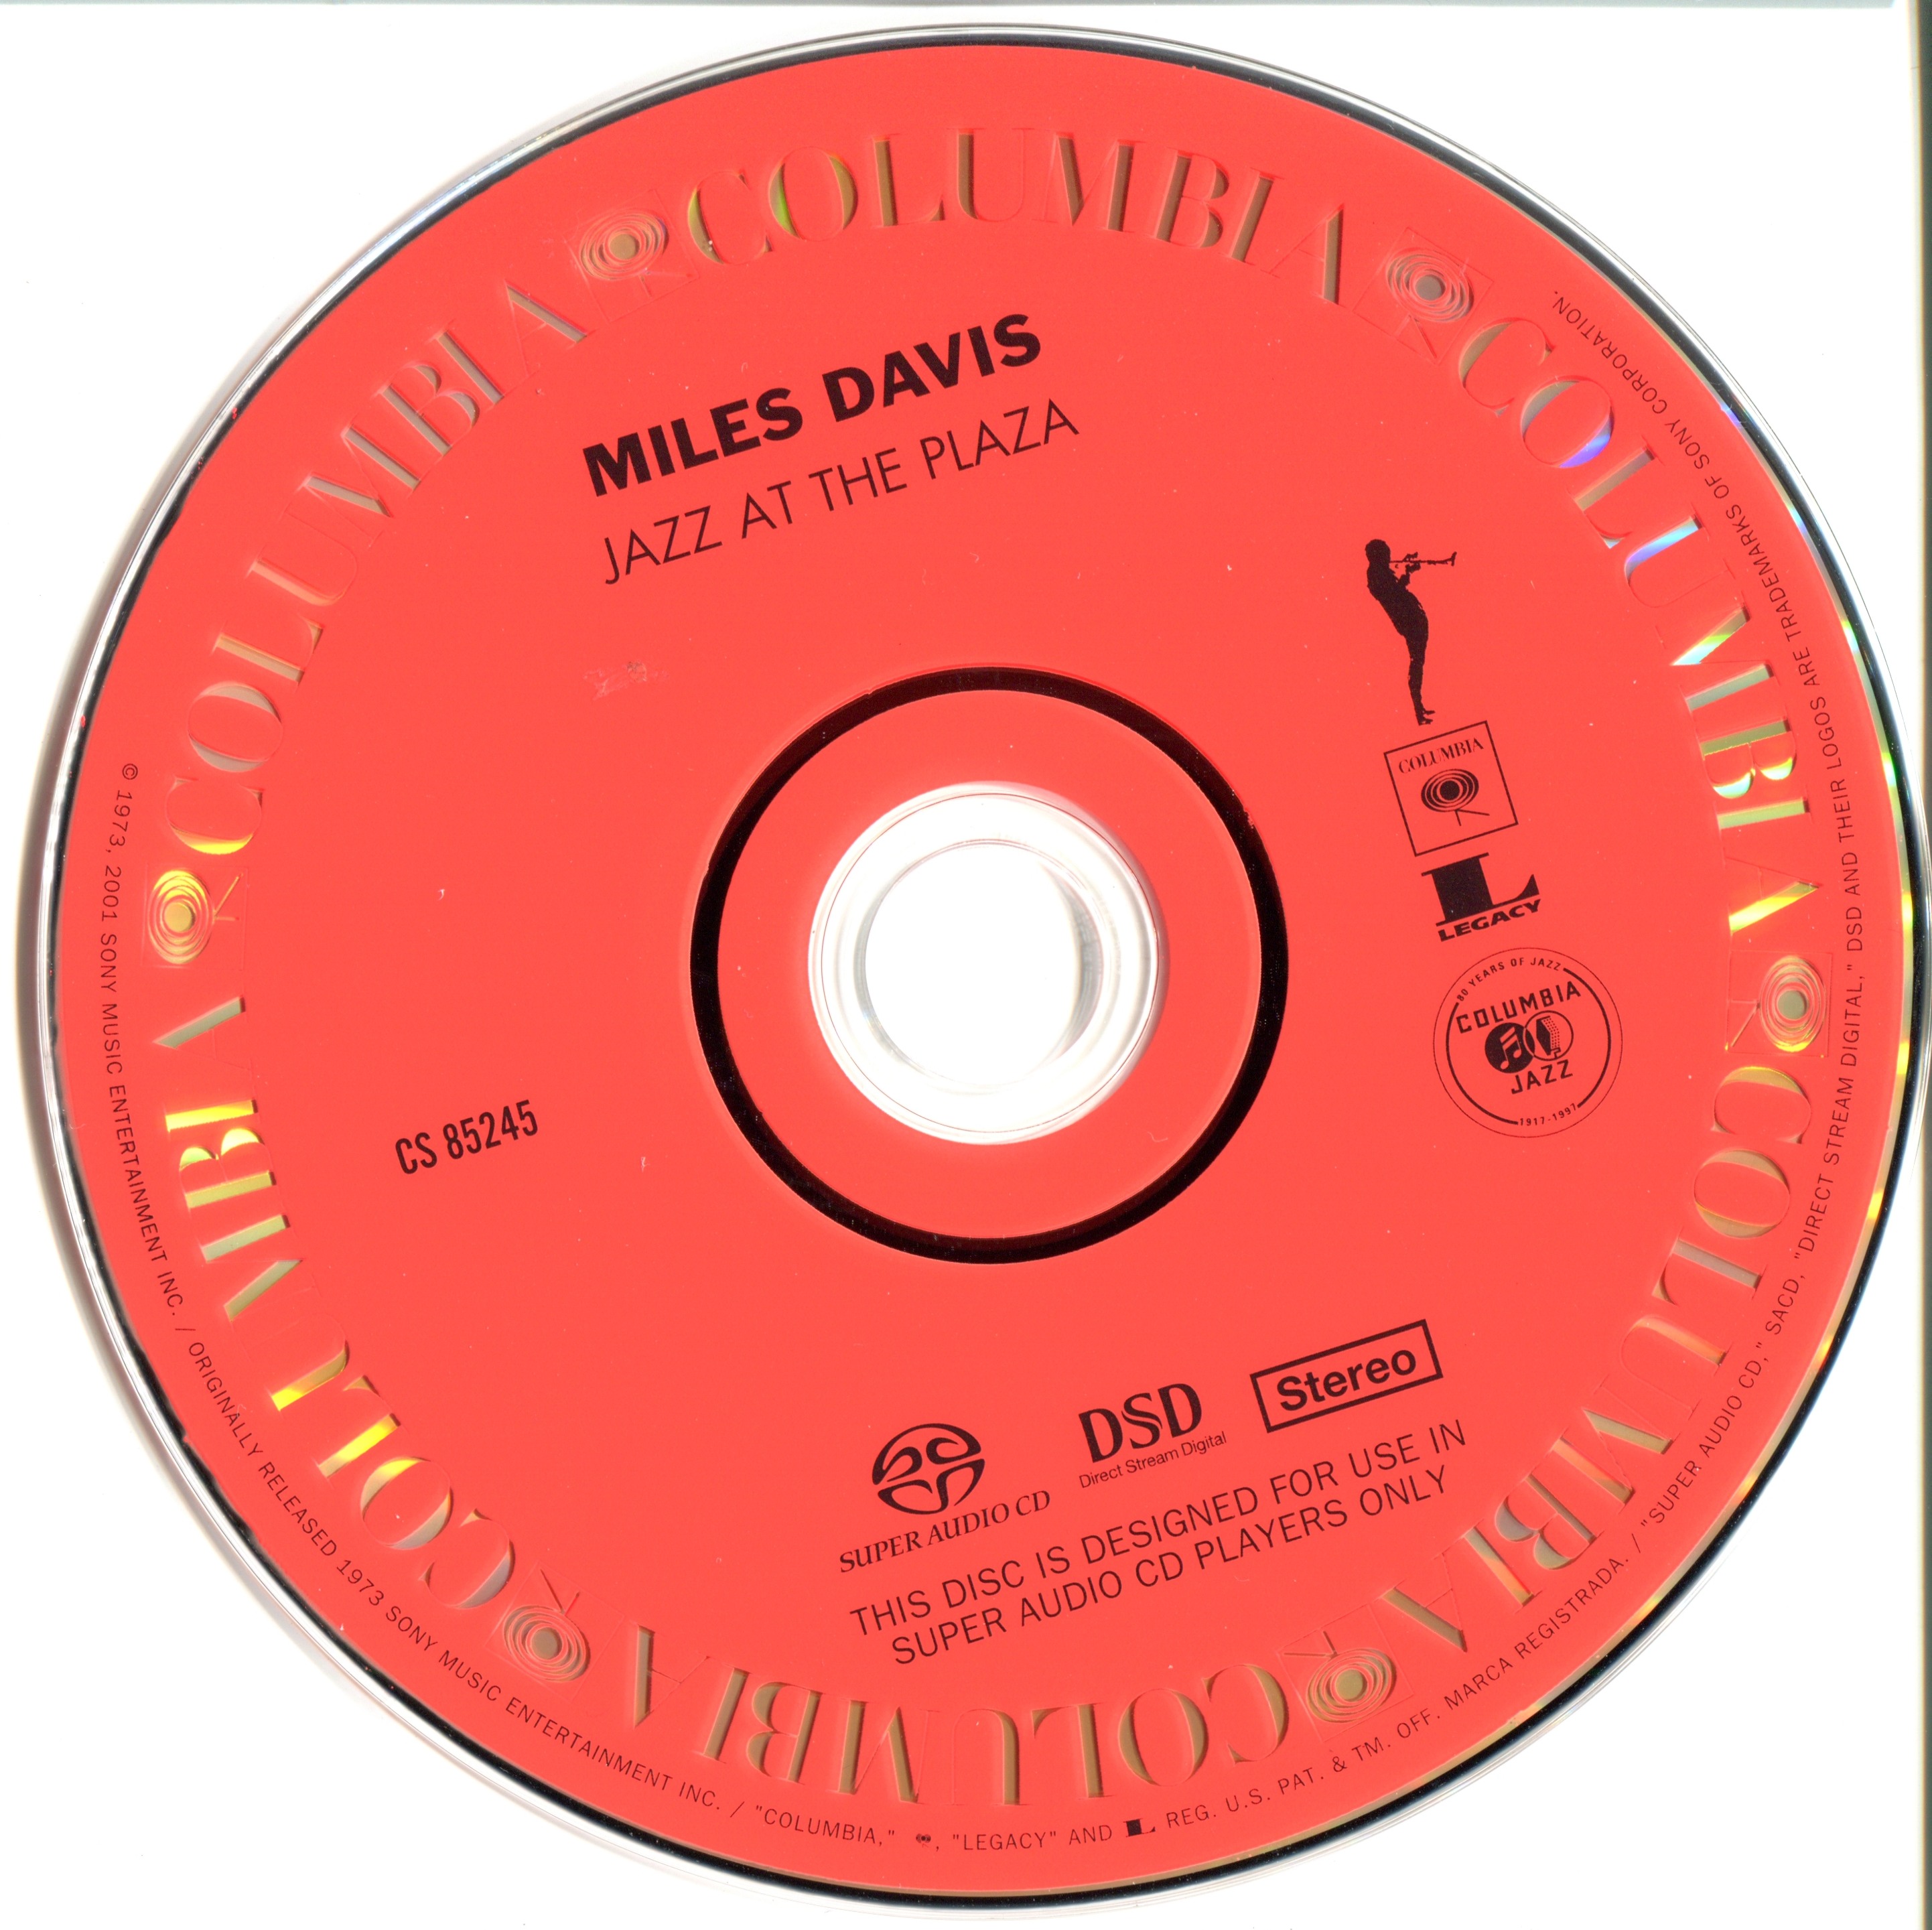 Miles Davis - 1973 - Jazz At The Plaza [2001 SACD] 24-88.2